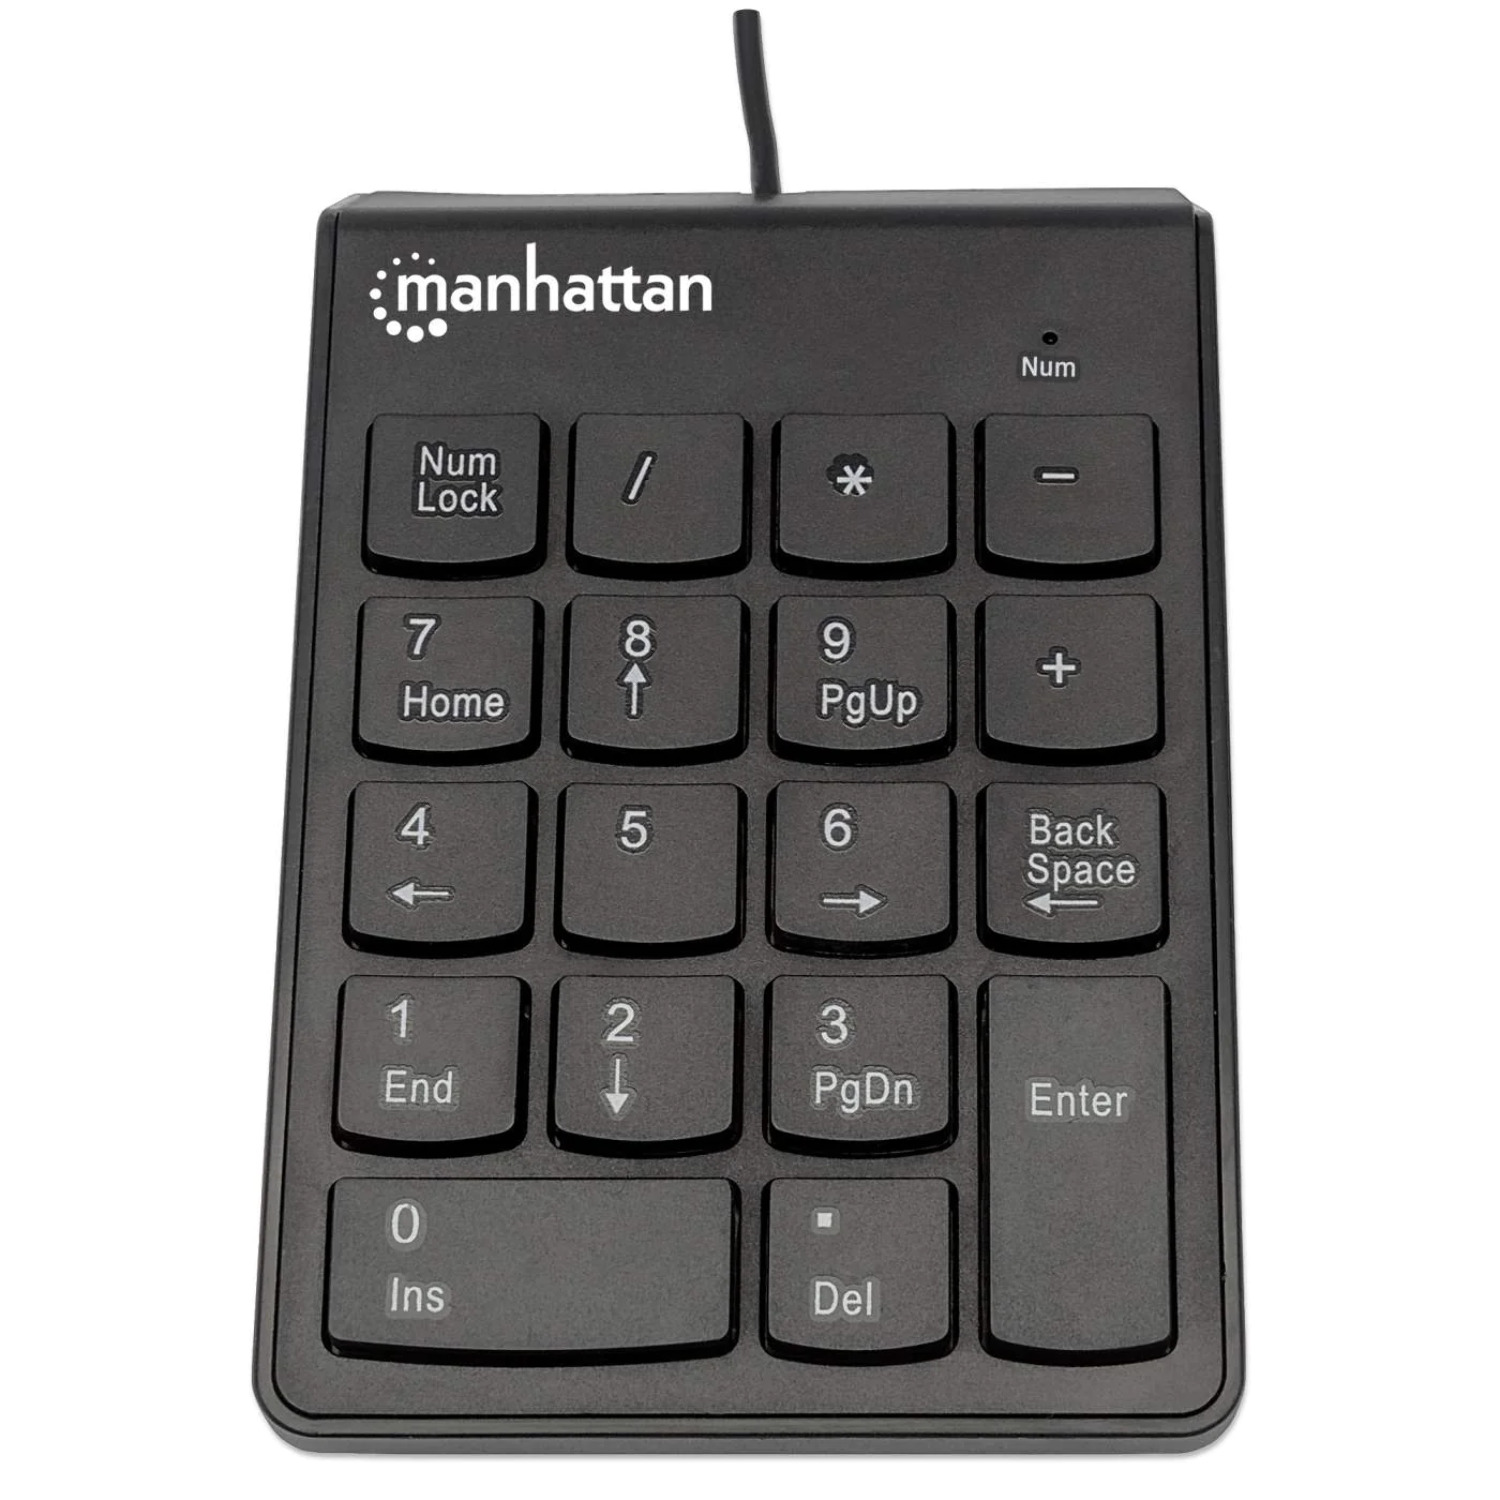 Manhattan USB Numeric Keypad with 18 Full-size keys - image 3 of 4